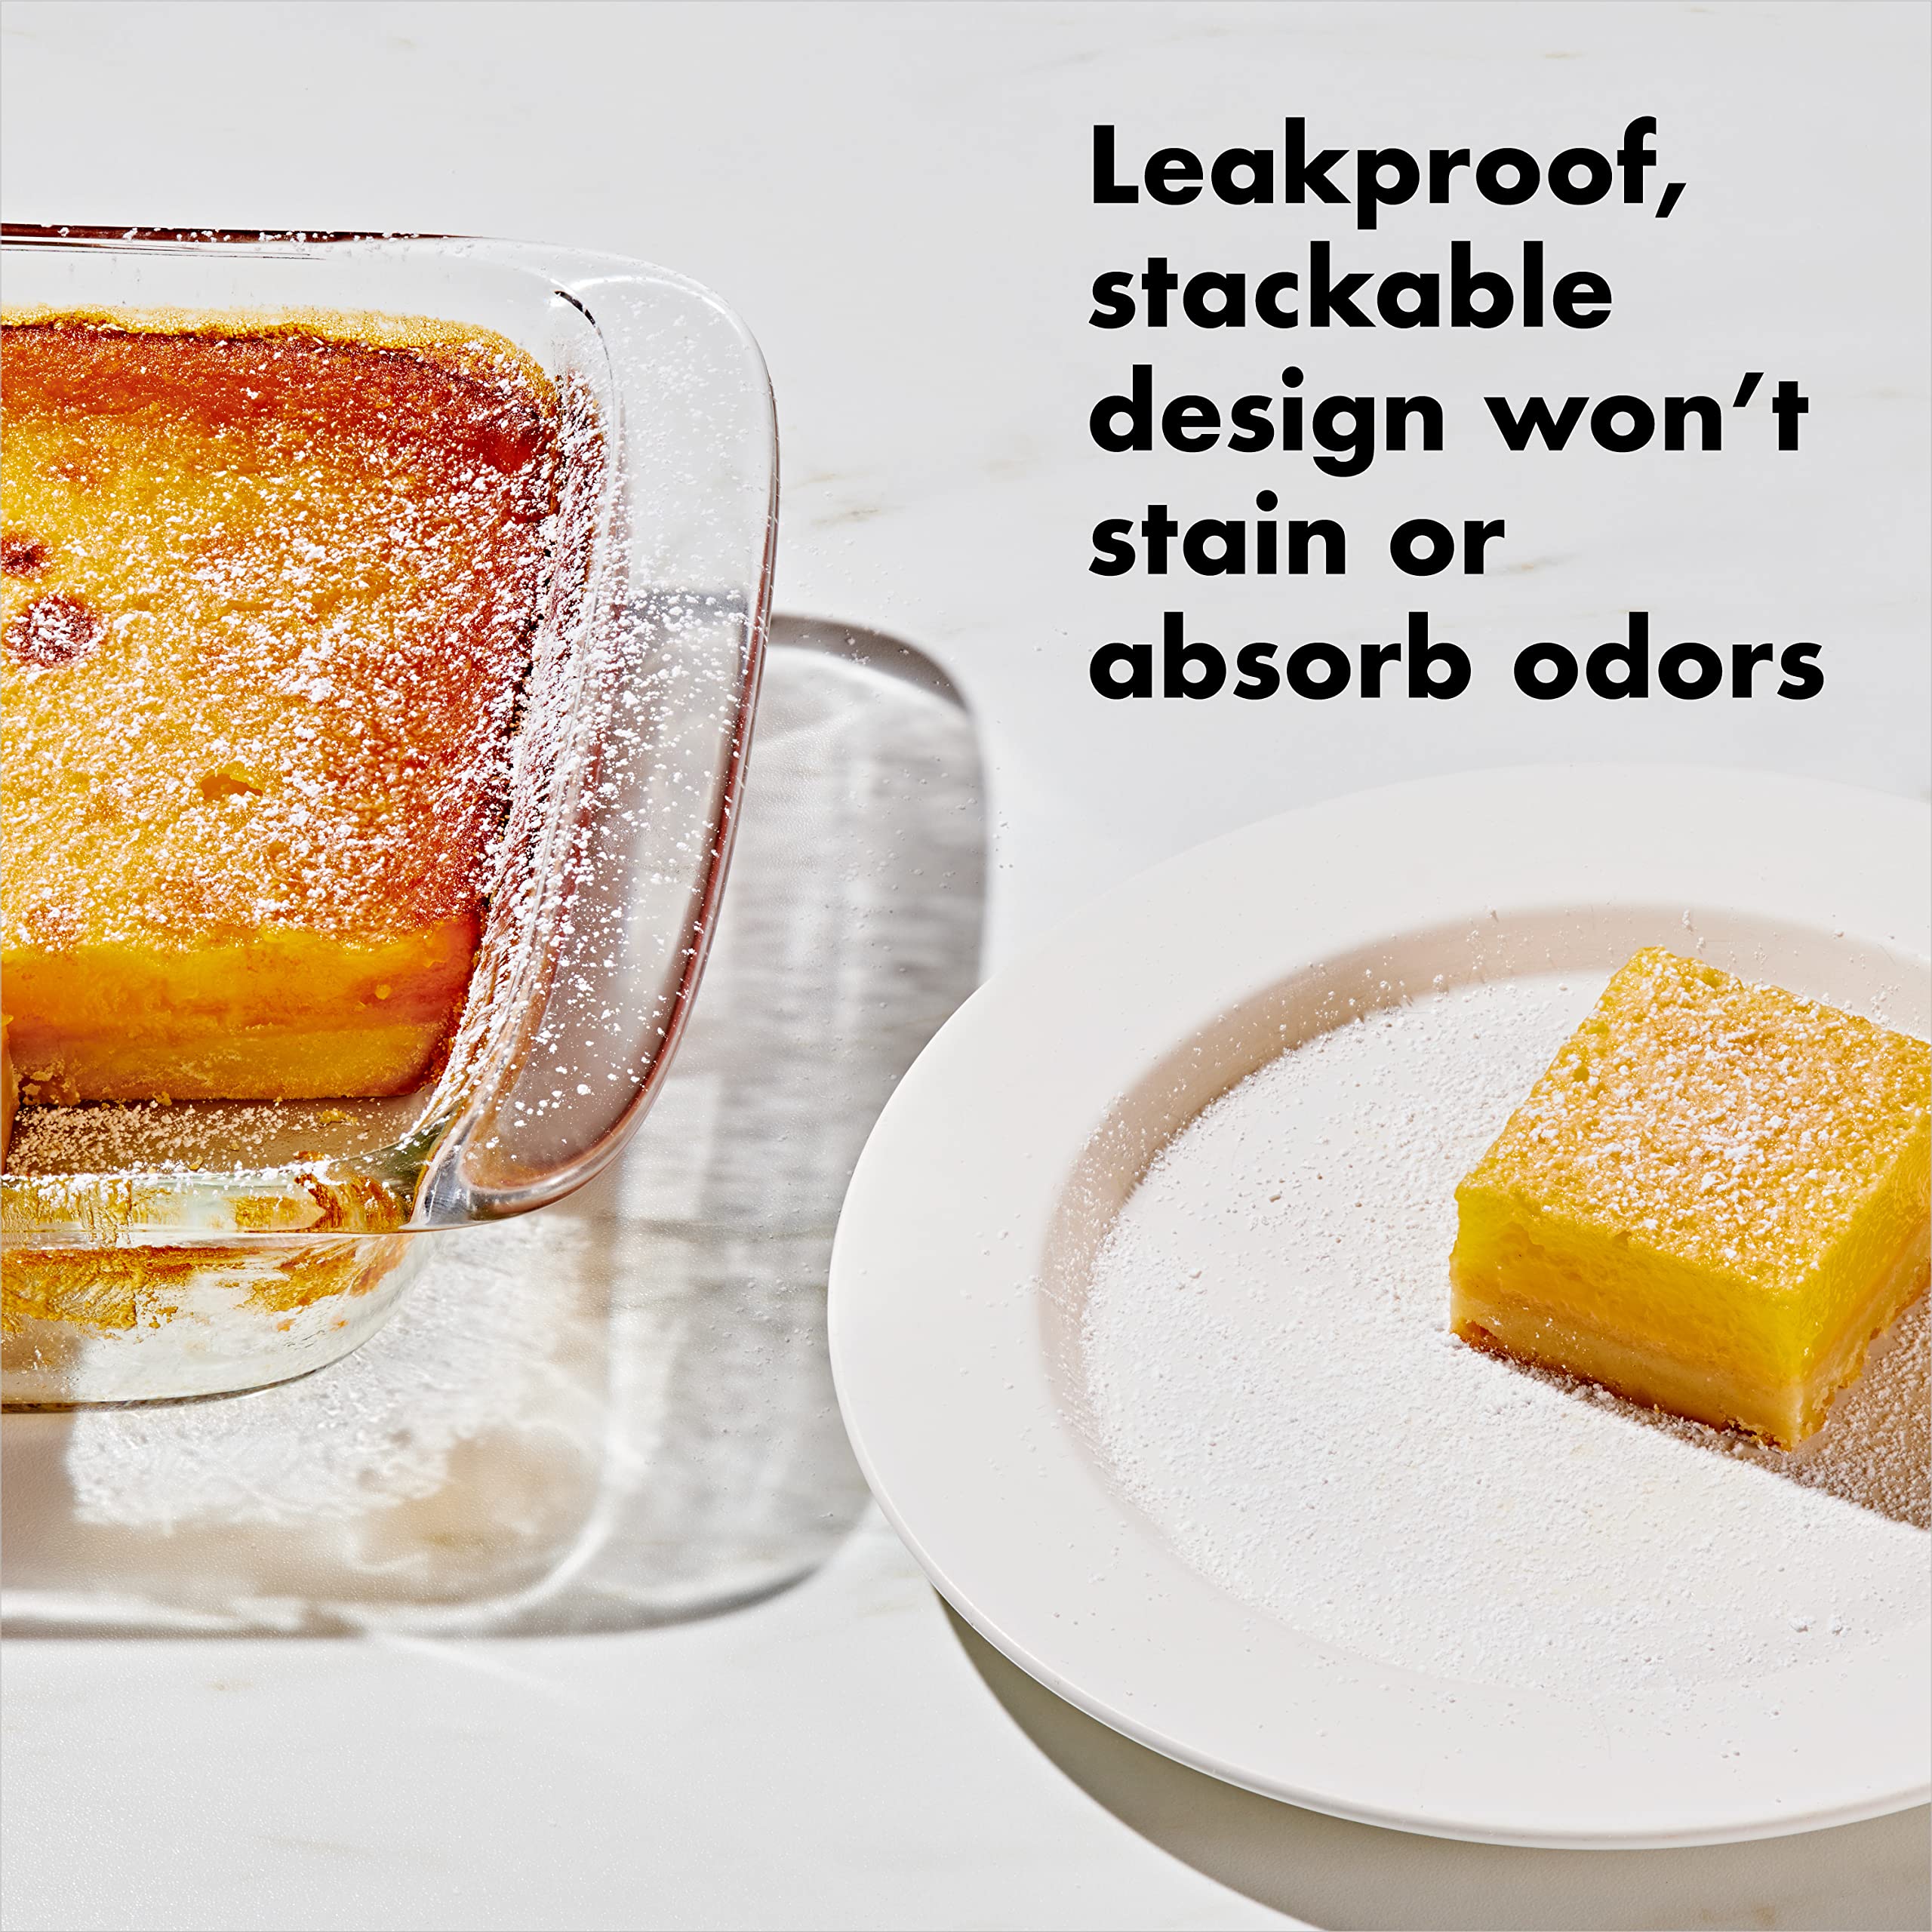 OXO Good Grips 14-Piece Glass Bake, Serve & Store Set